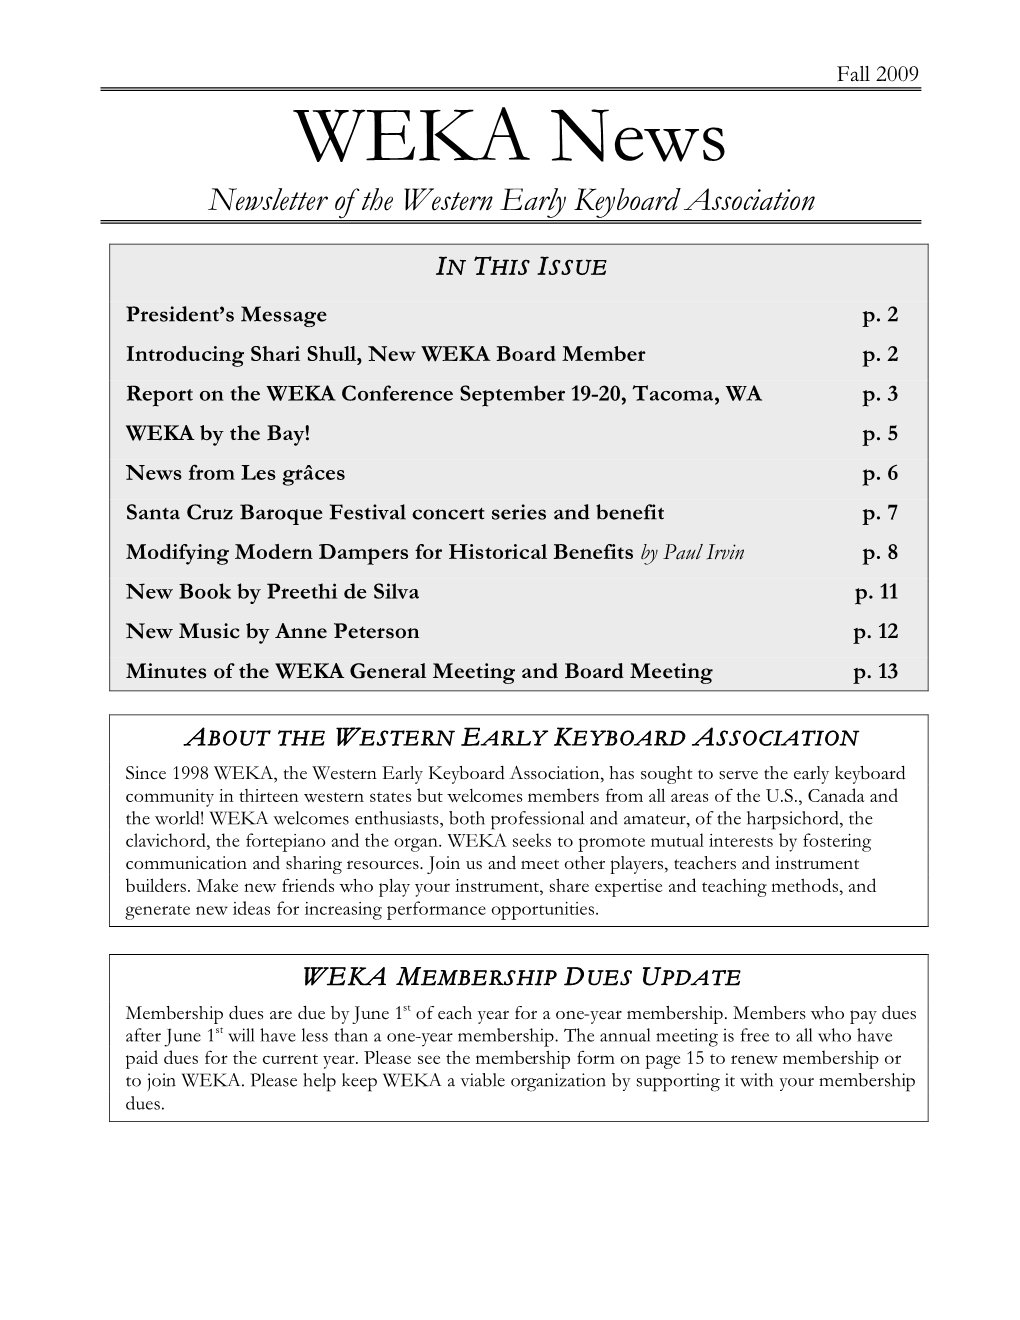 Fall 2009 WEKA News Newsletter of the Western Early Keyboard Association